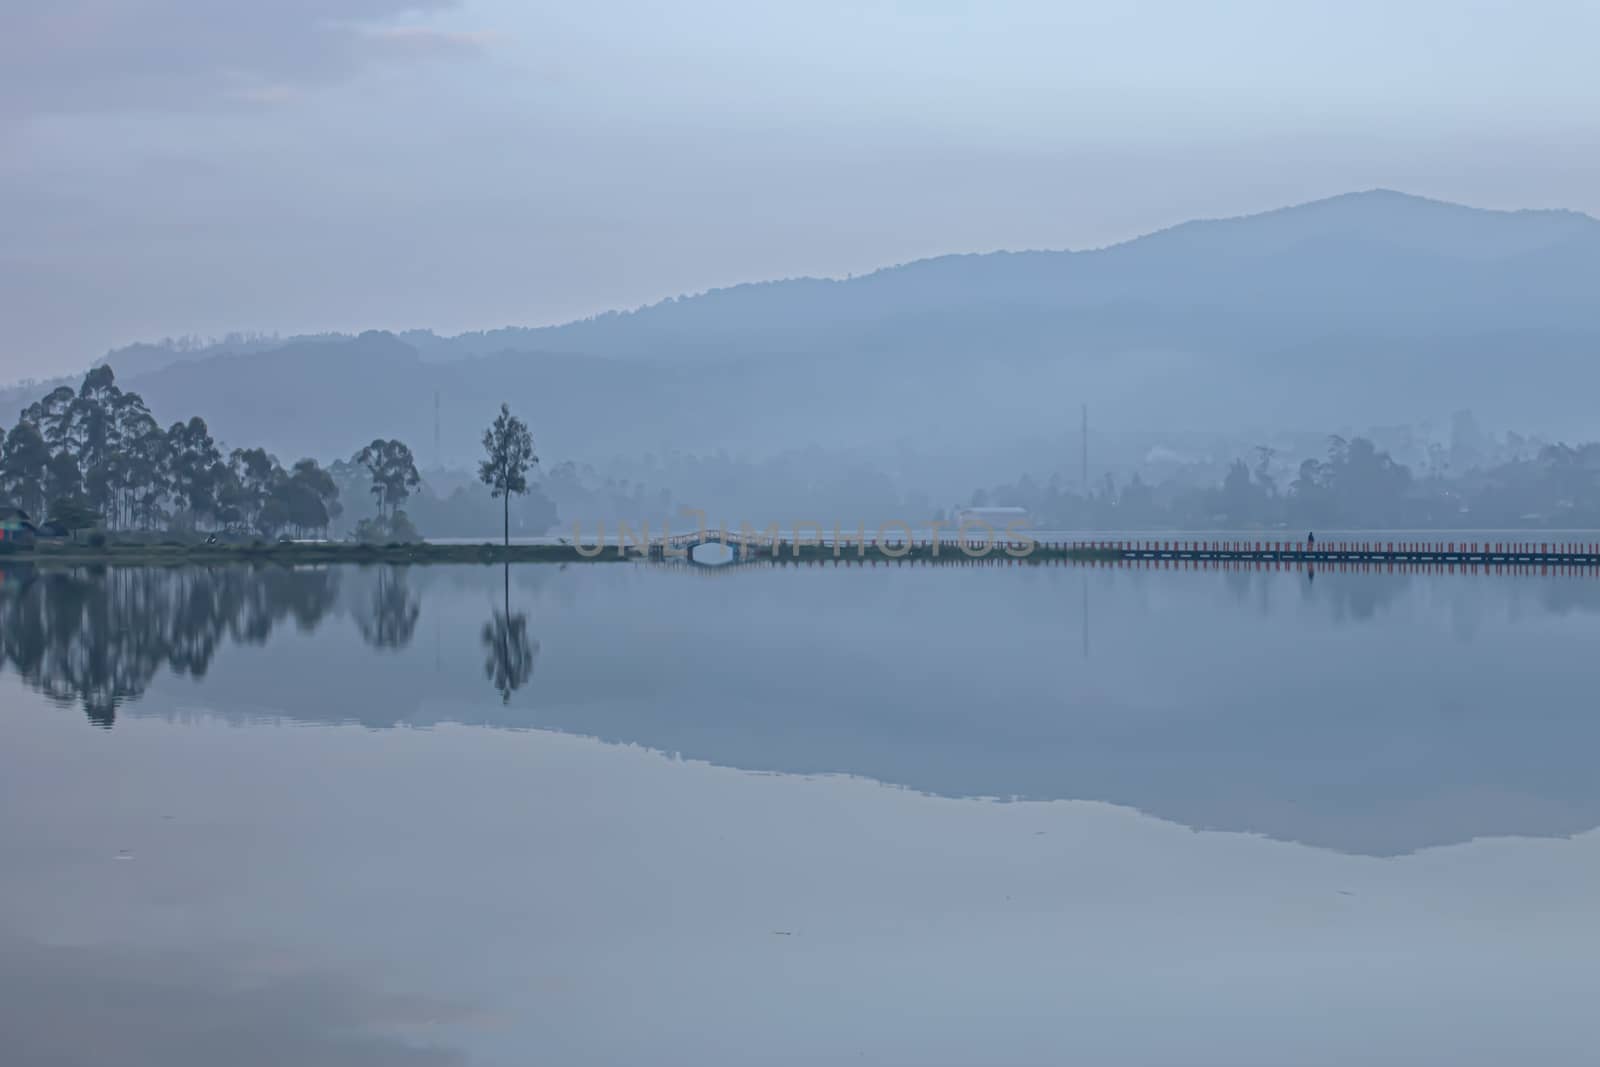 Reflection mountain on a lake Cileunca by irwanmotret